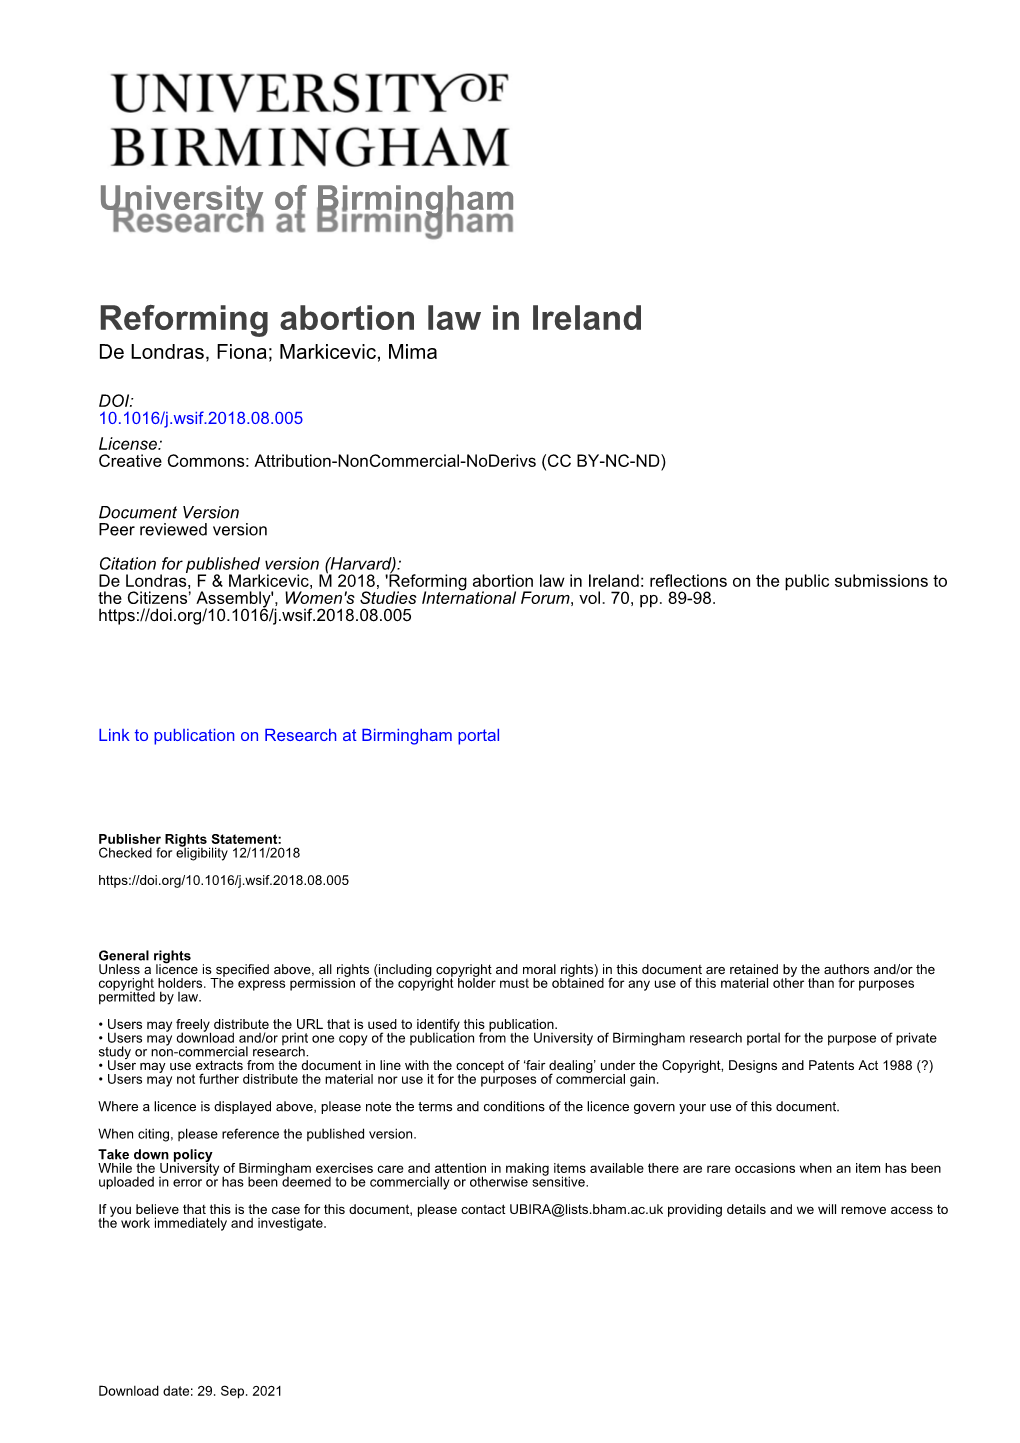 University of Birmingham Reforming Abortion Law in Ireland